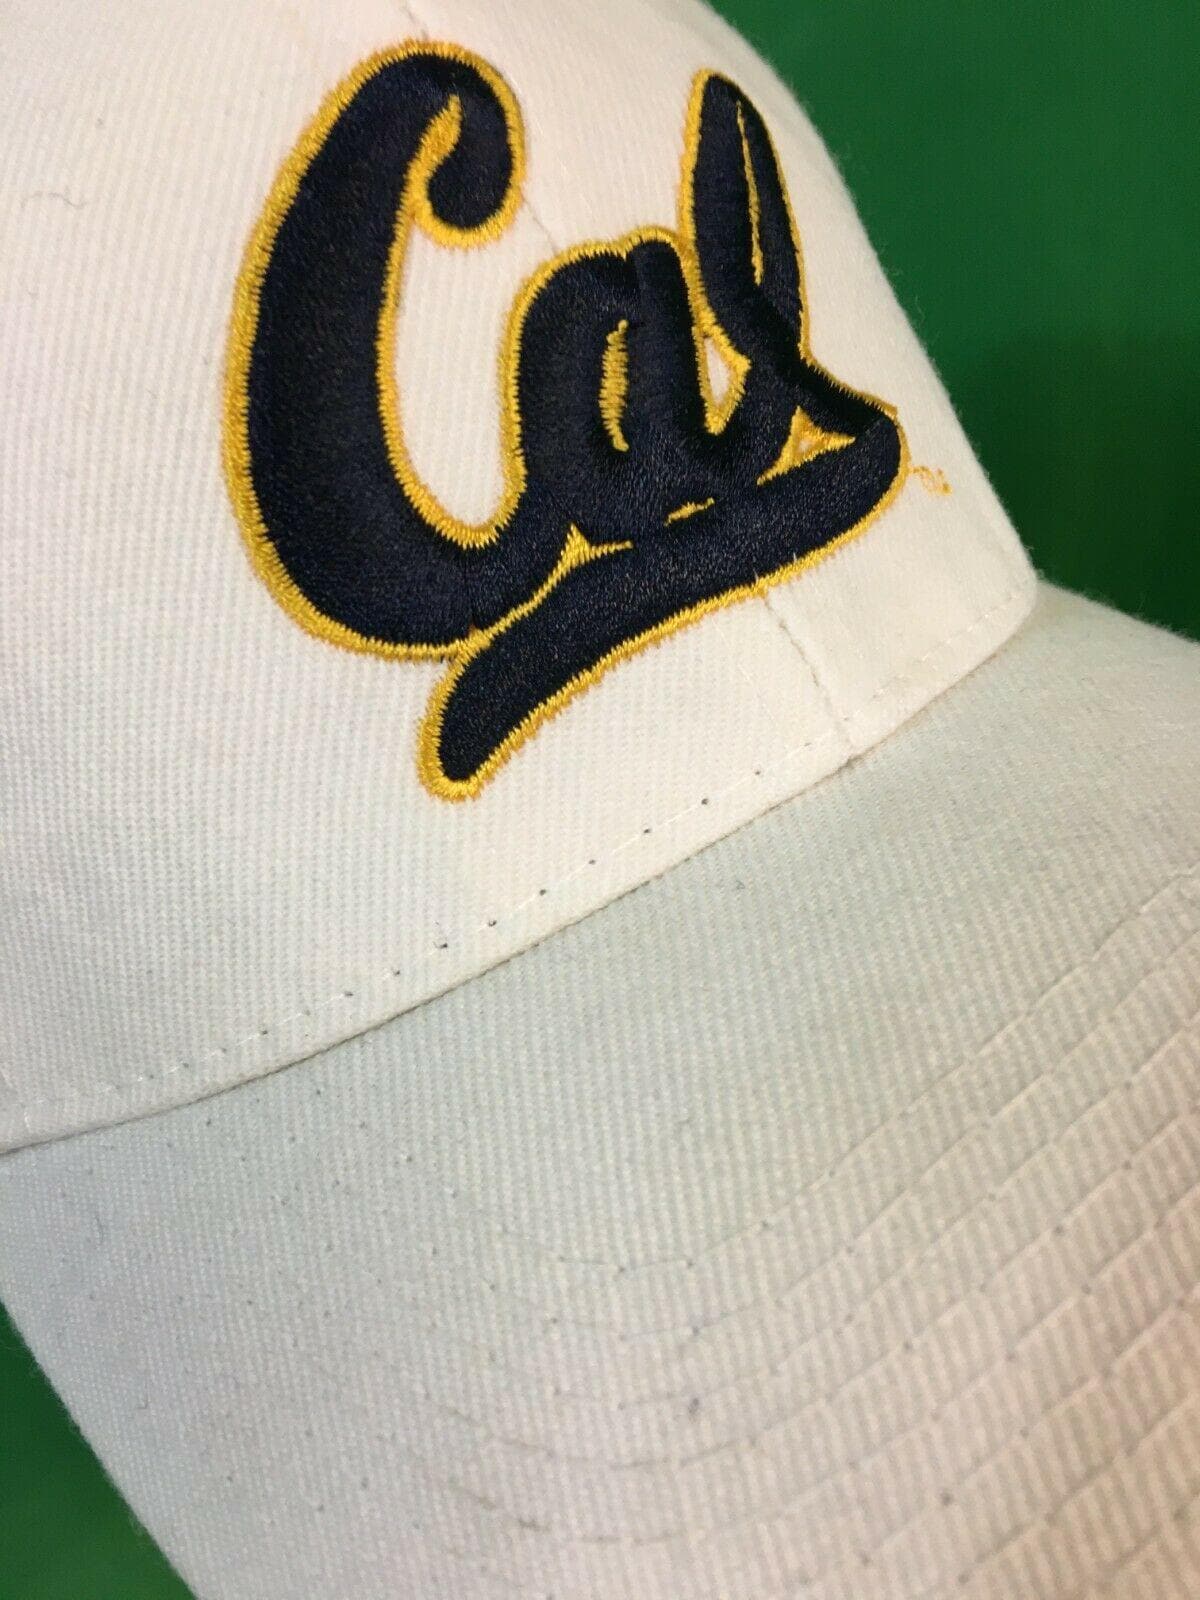 NCAA California Golden Bears Zephyr White Hat/Cap Size 7 NWT